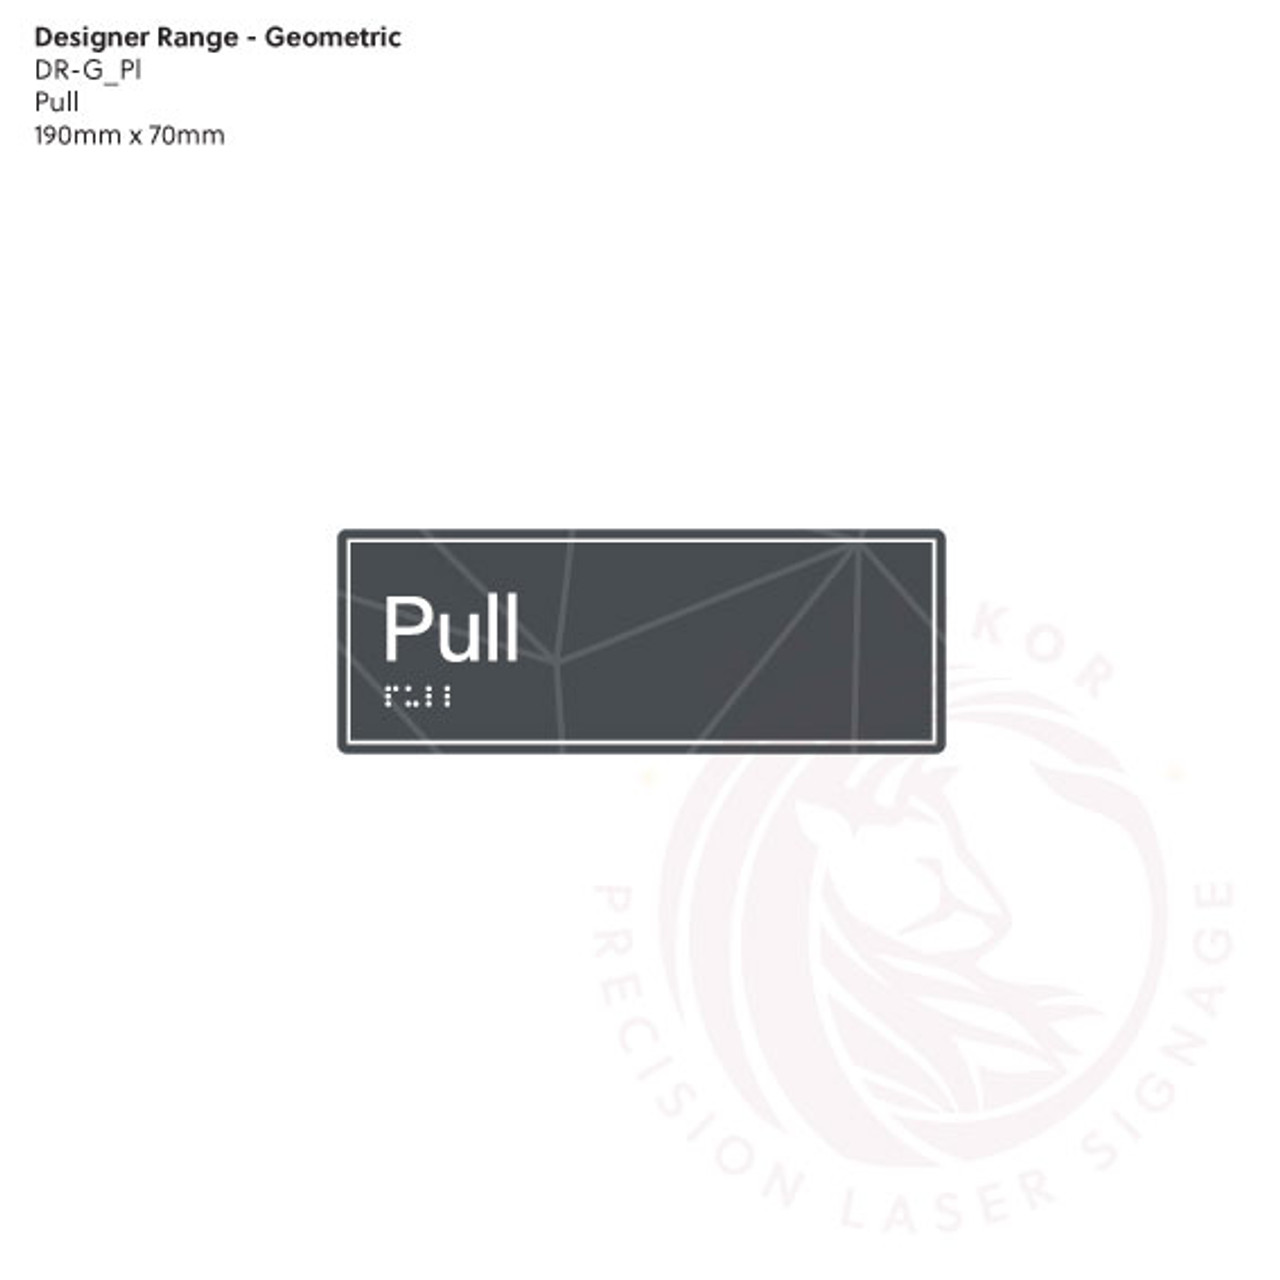 Geometric Designer Range - Pull